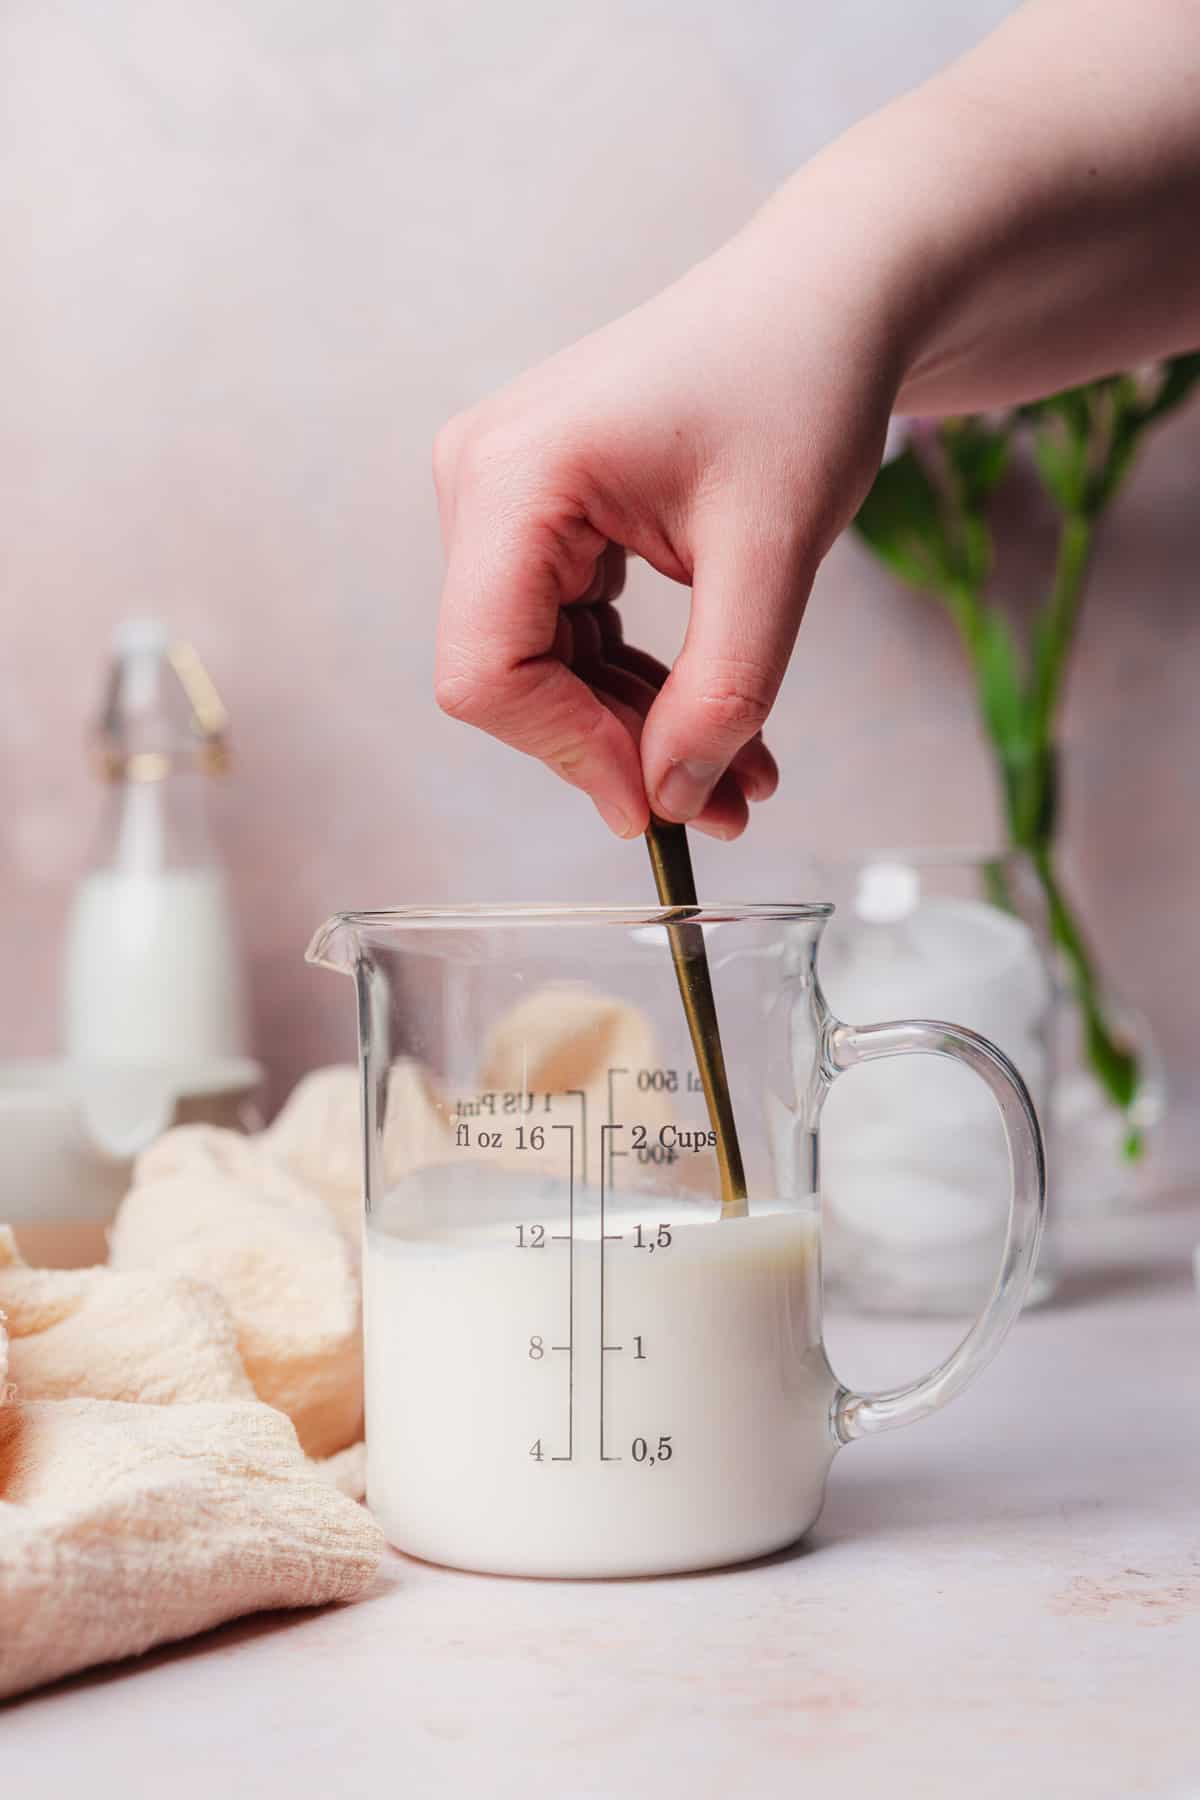 stirring vanilla extract into a beaker with milk